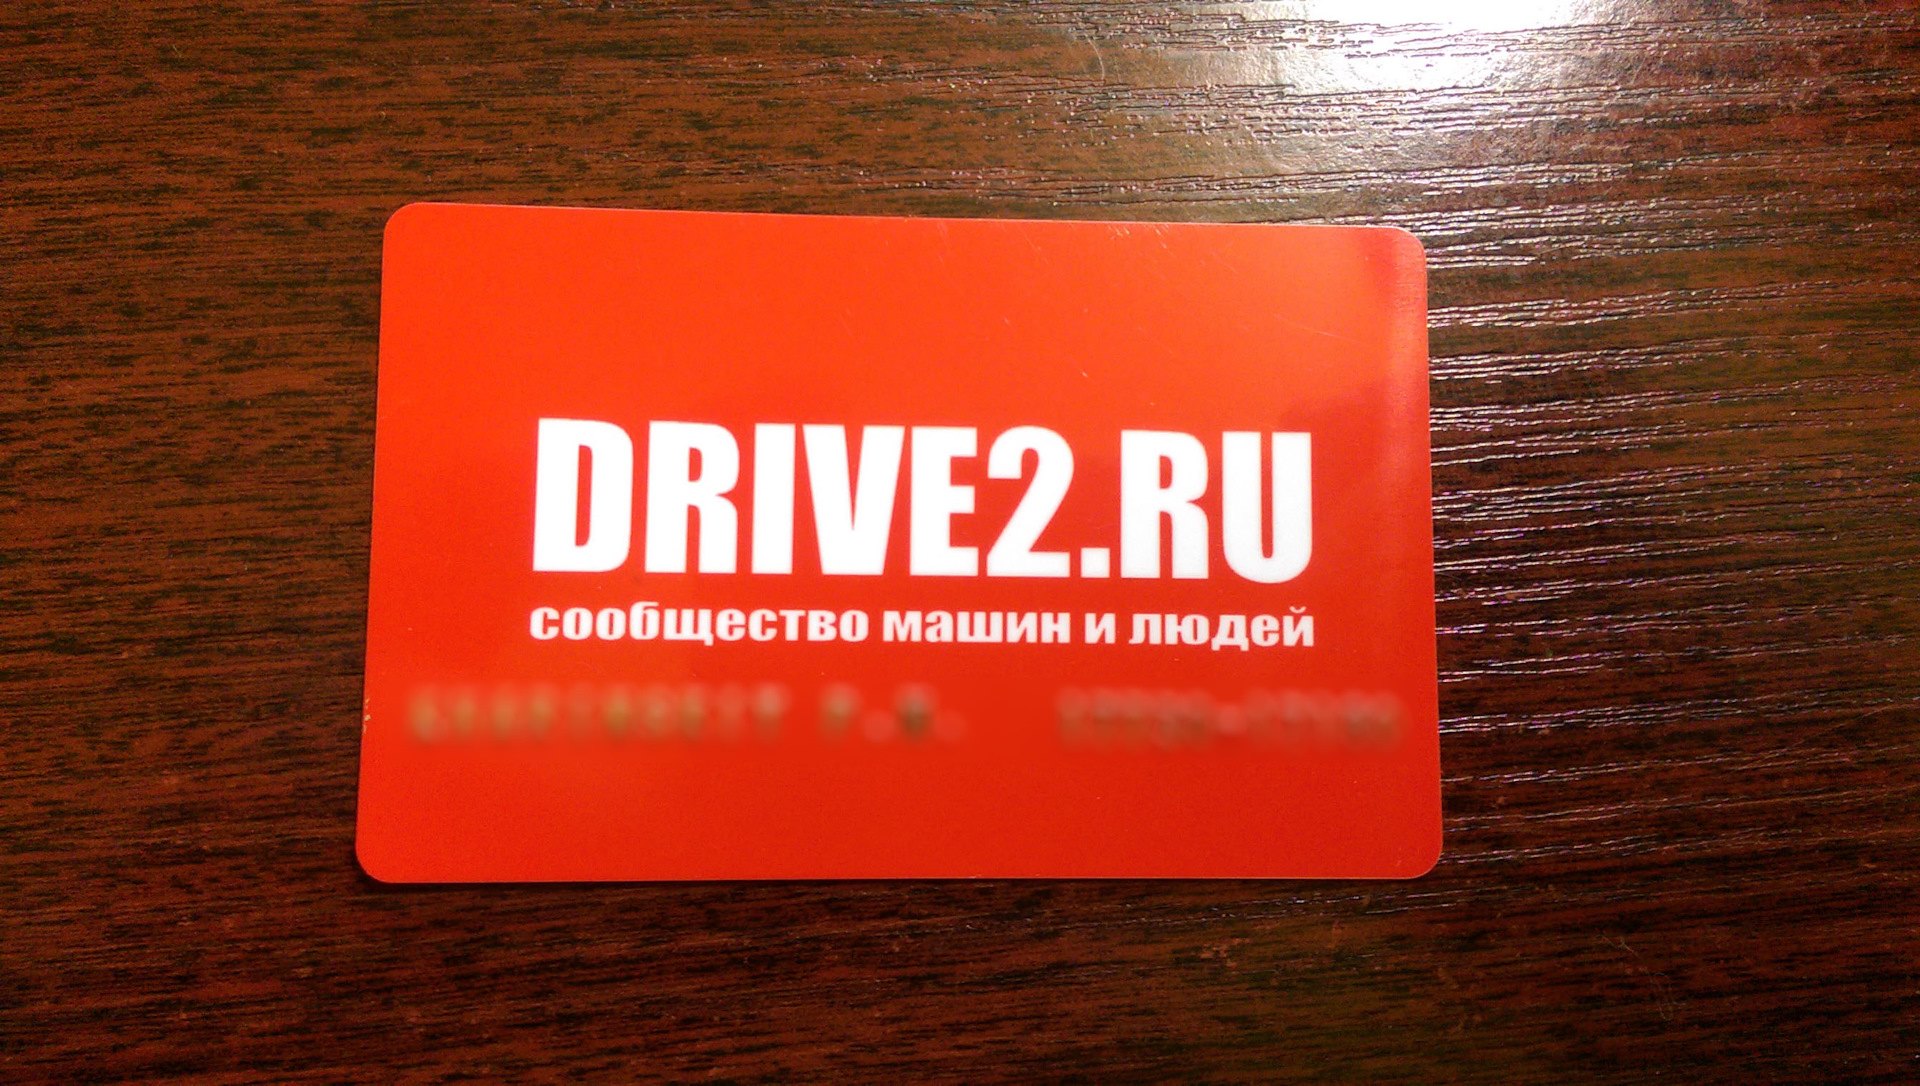 Drive card. Клубная карта drive2 Кузбасс.